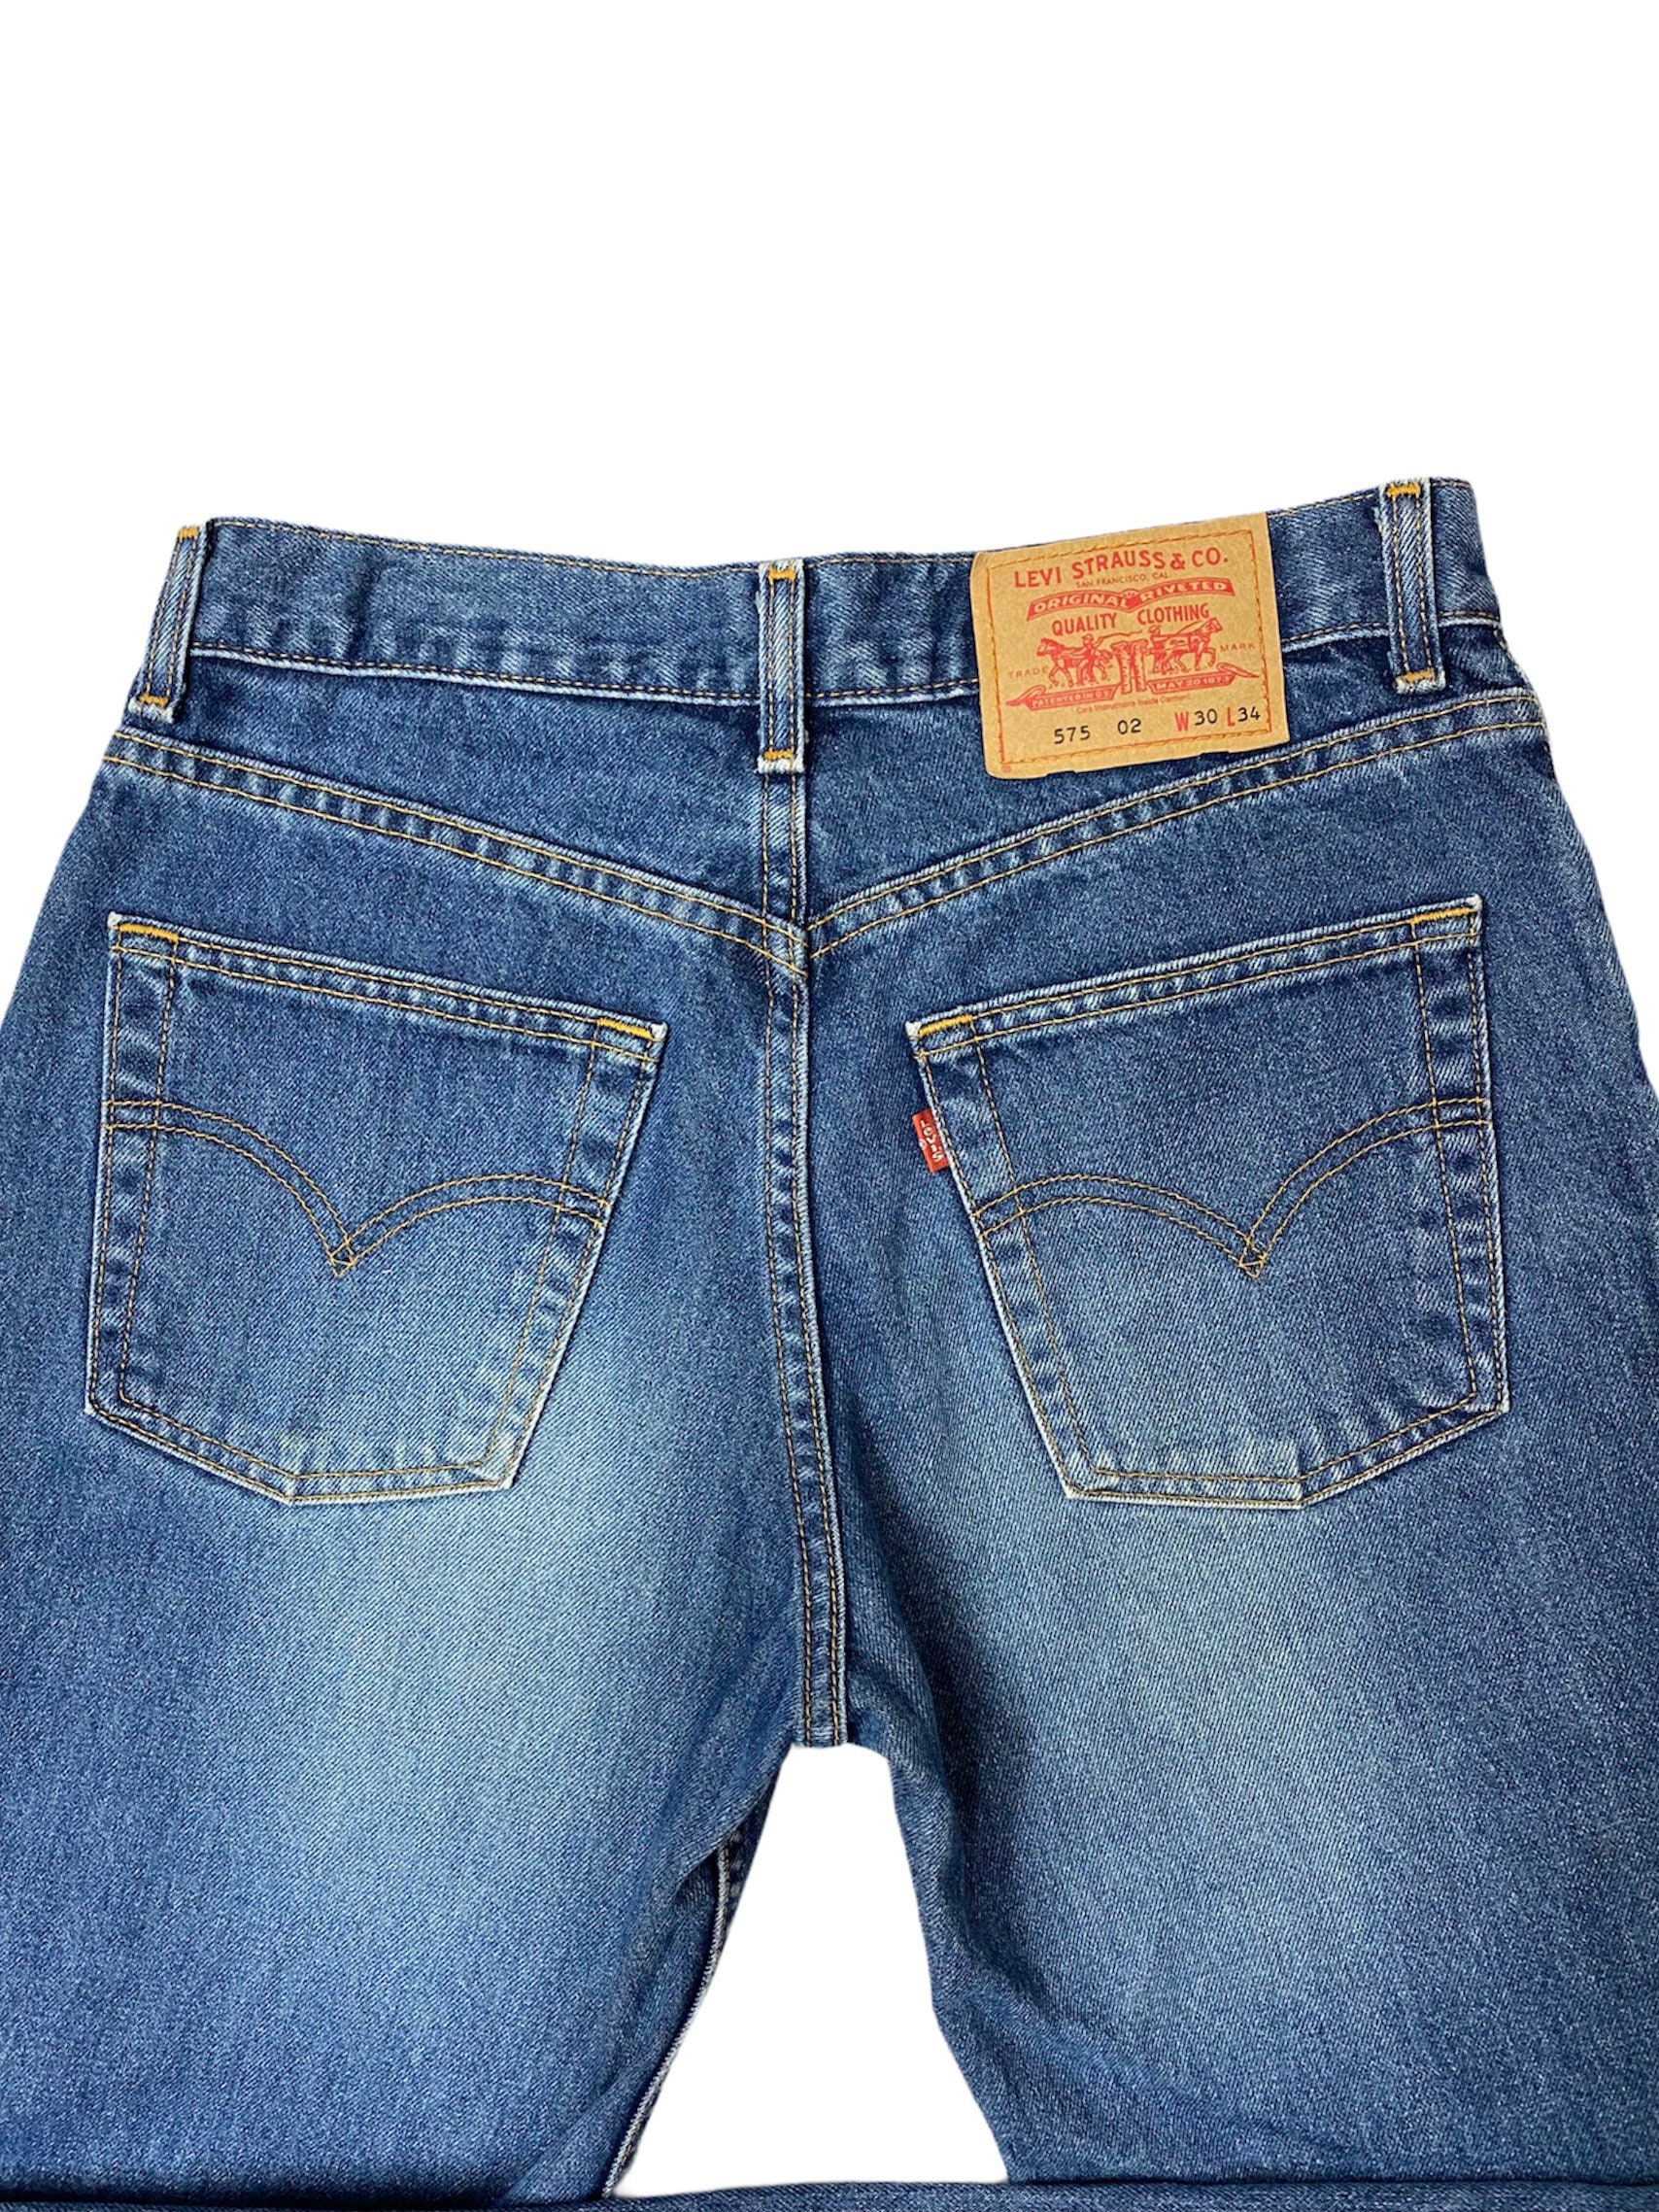 Opstå civilisation Perfervid Vintage Levis 575 Jeans 30 Medium-dark Wash Straigbt Leg W30 - Etsy Sweden